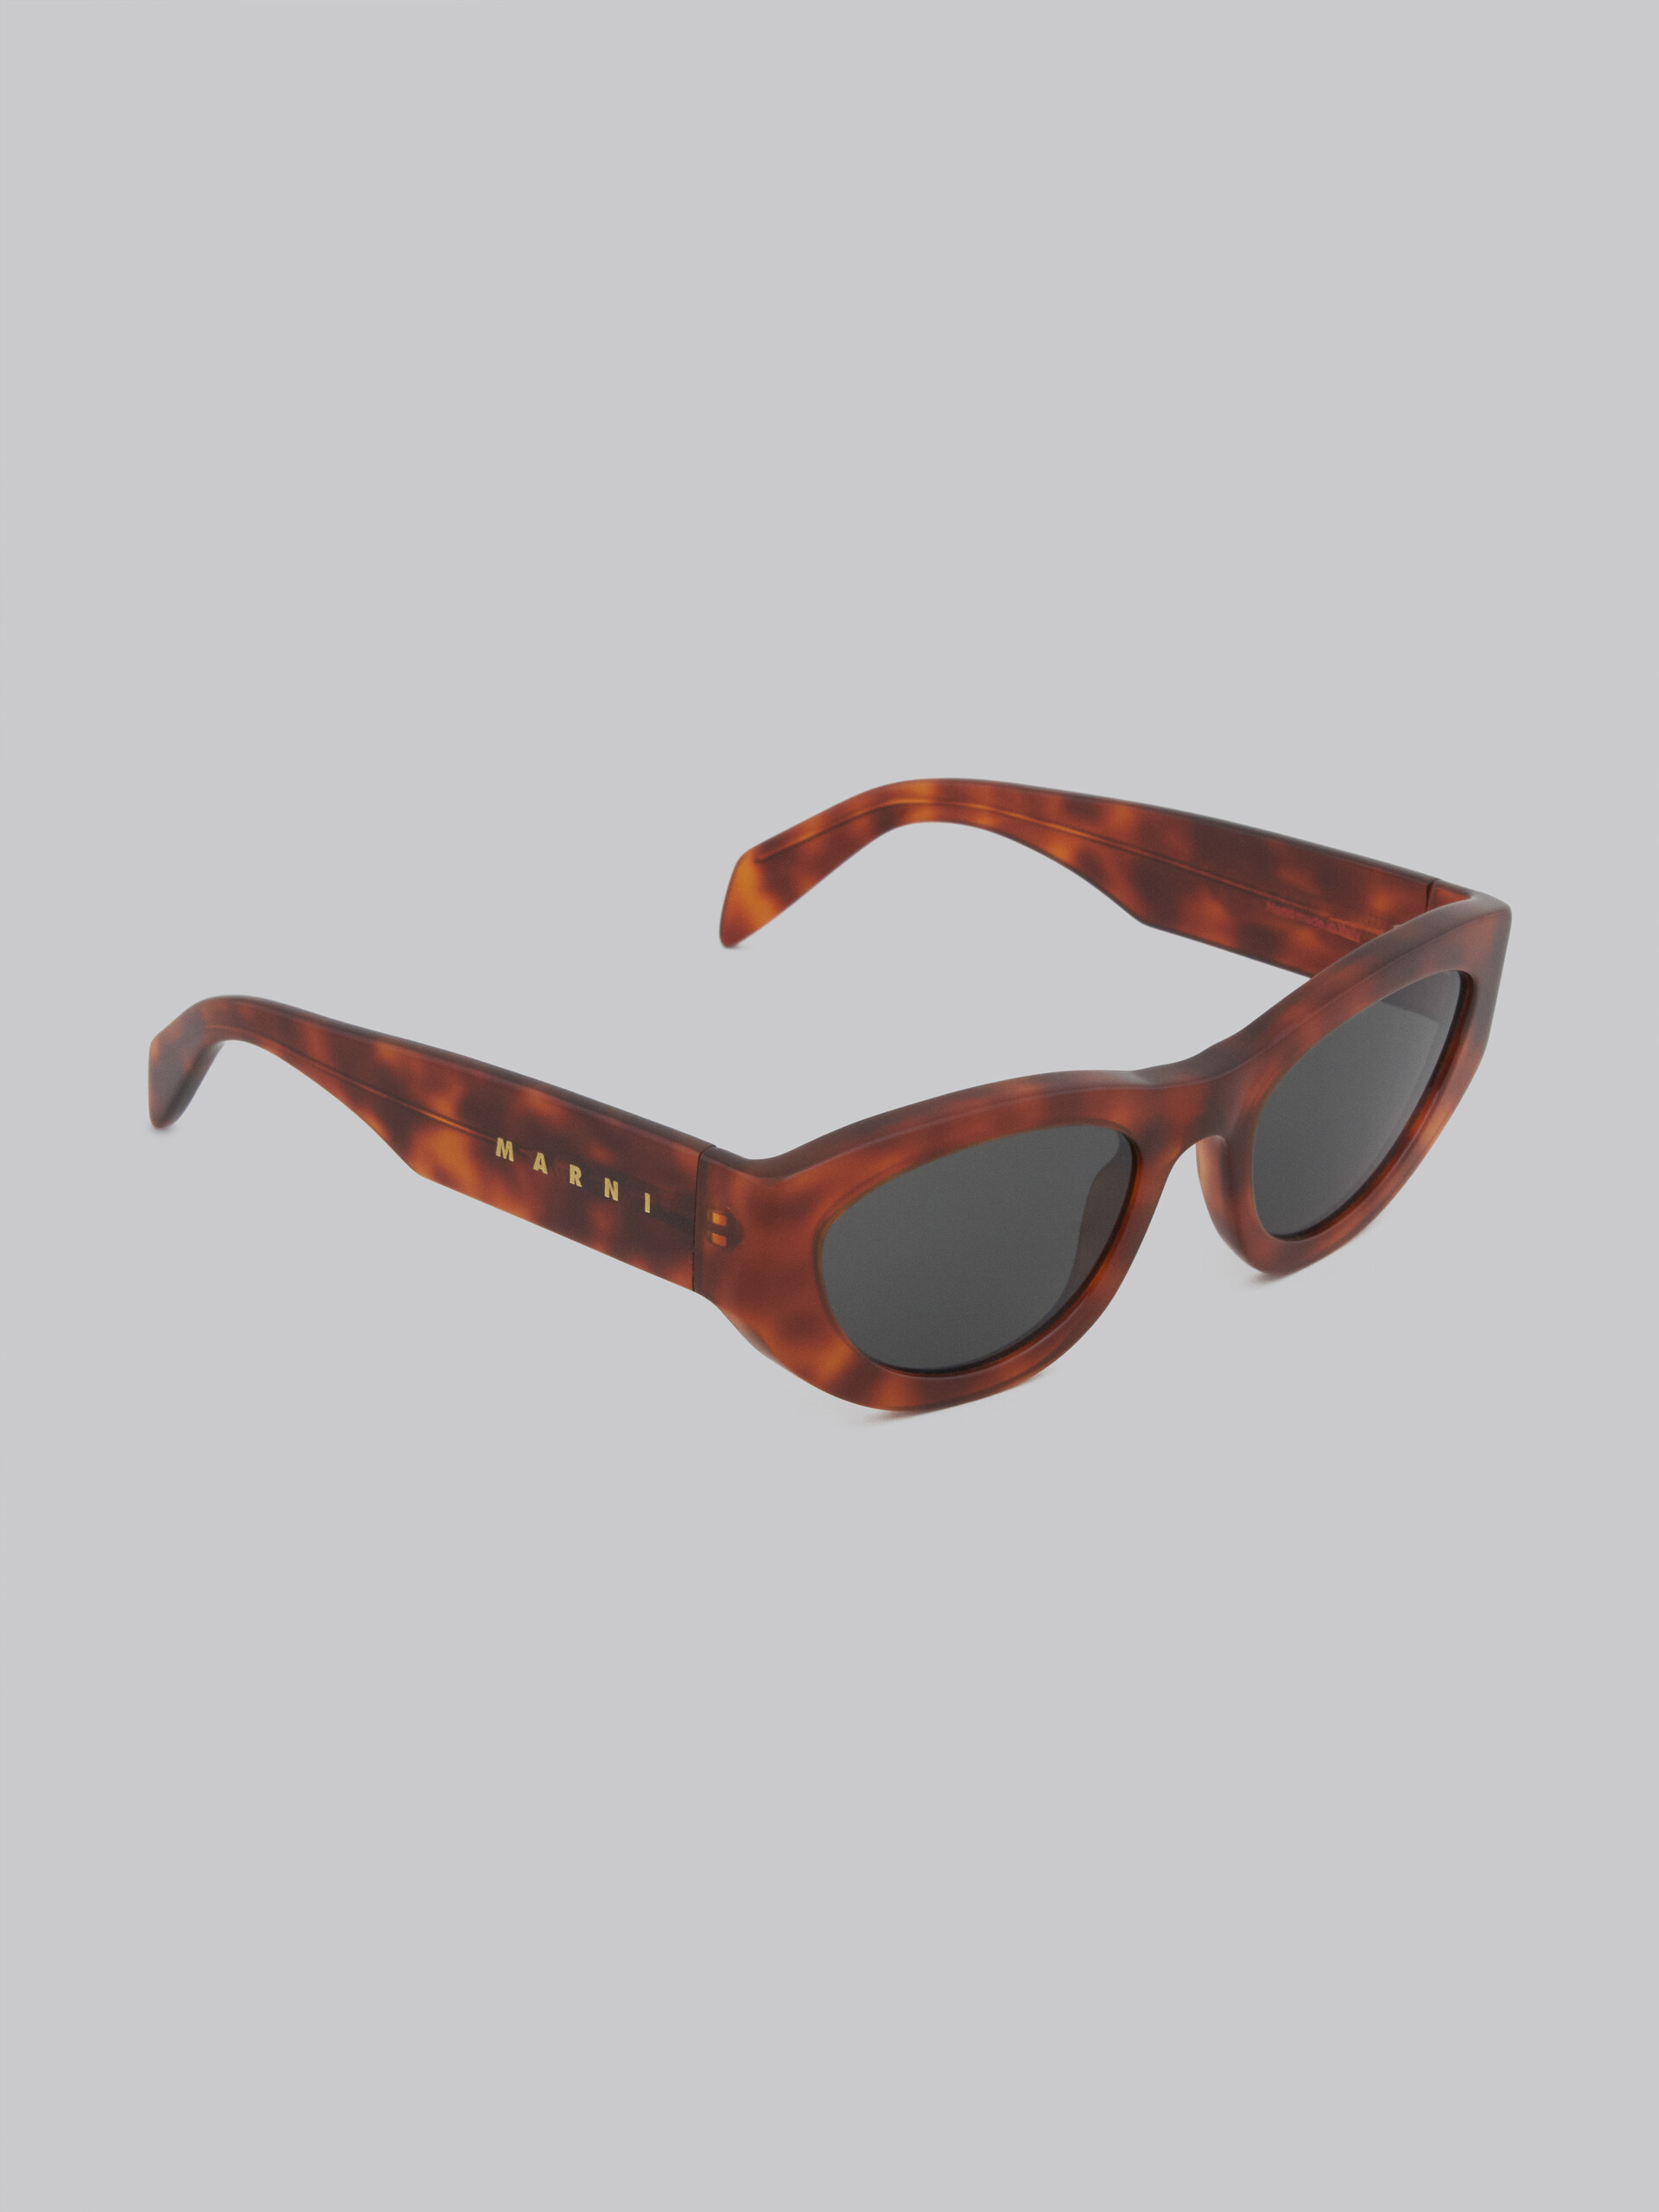 Tortoiseshell acetate RAINBOW MOUNTAINS sunglasses - Optical - Image 2